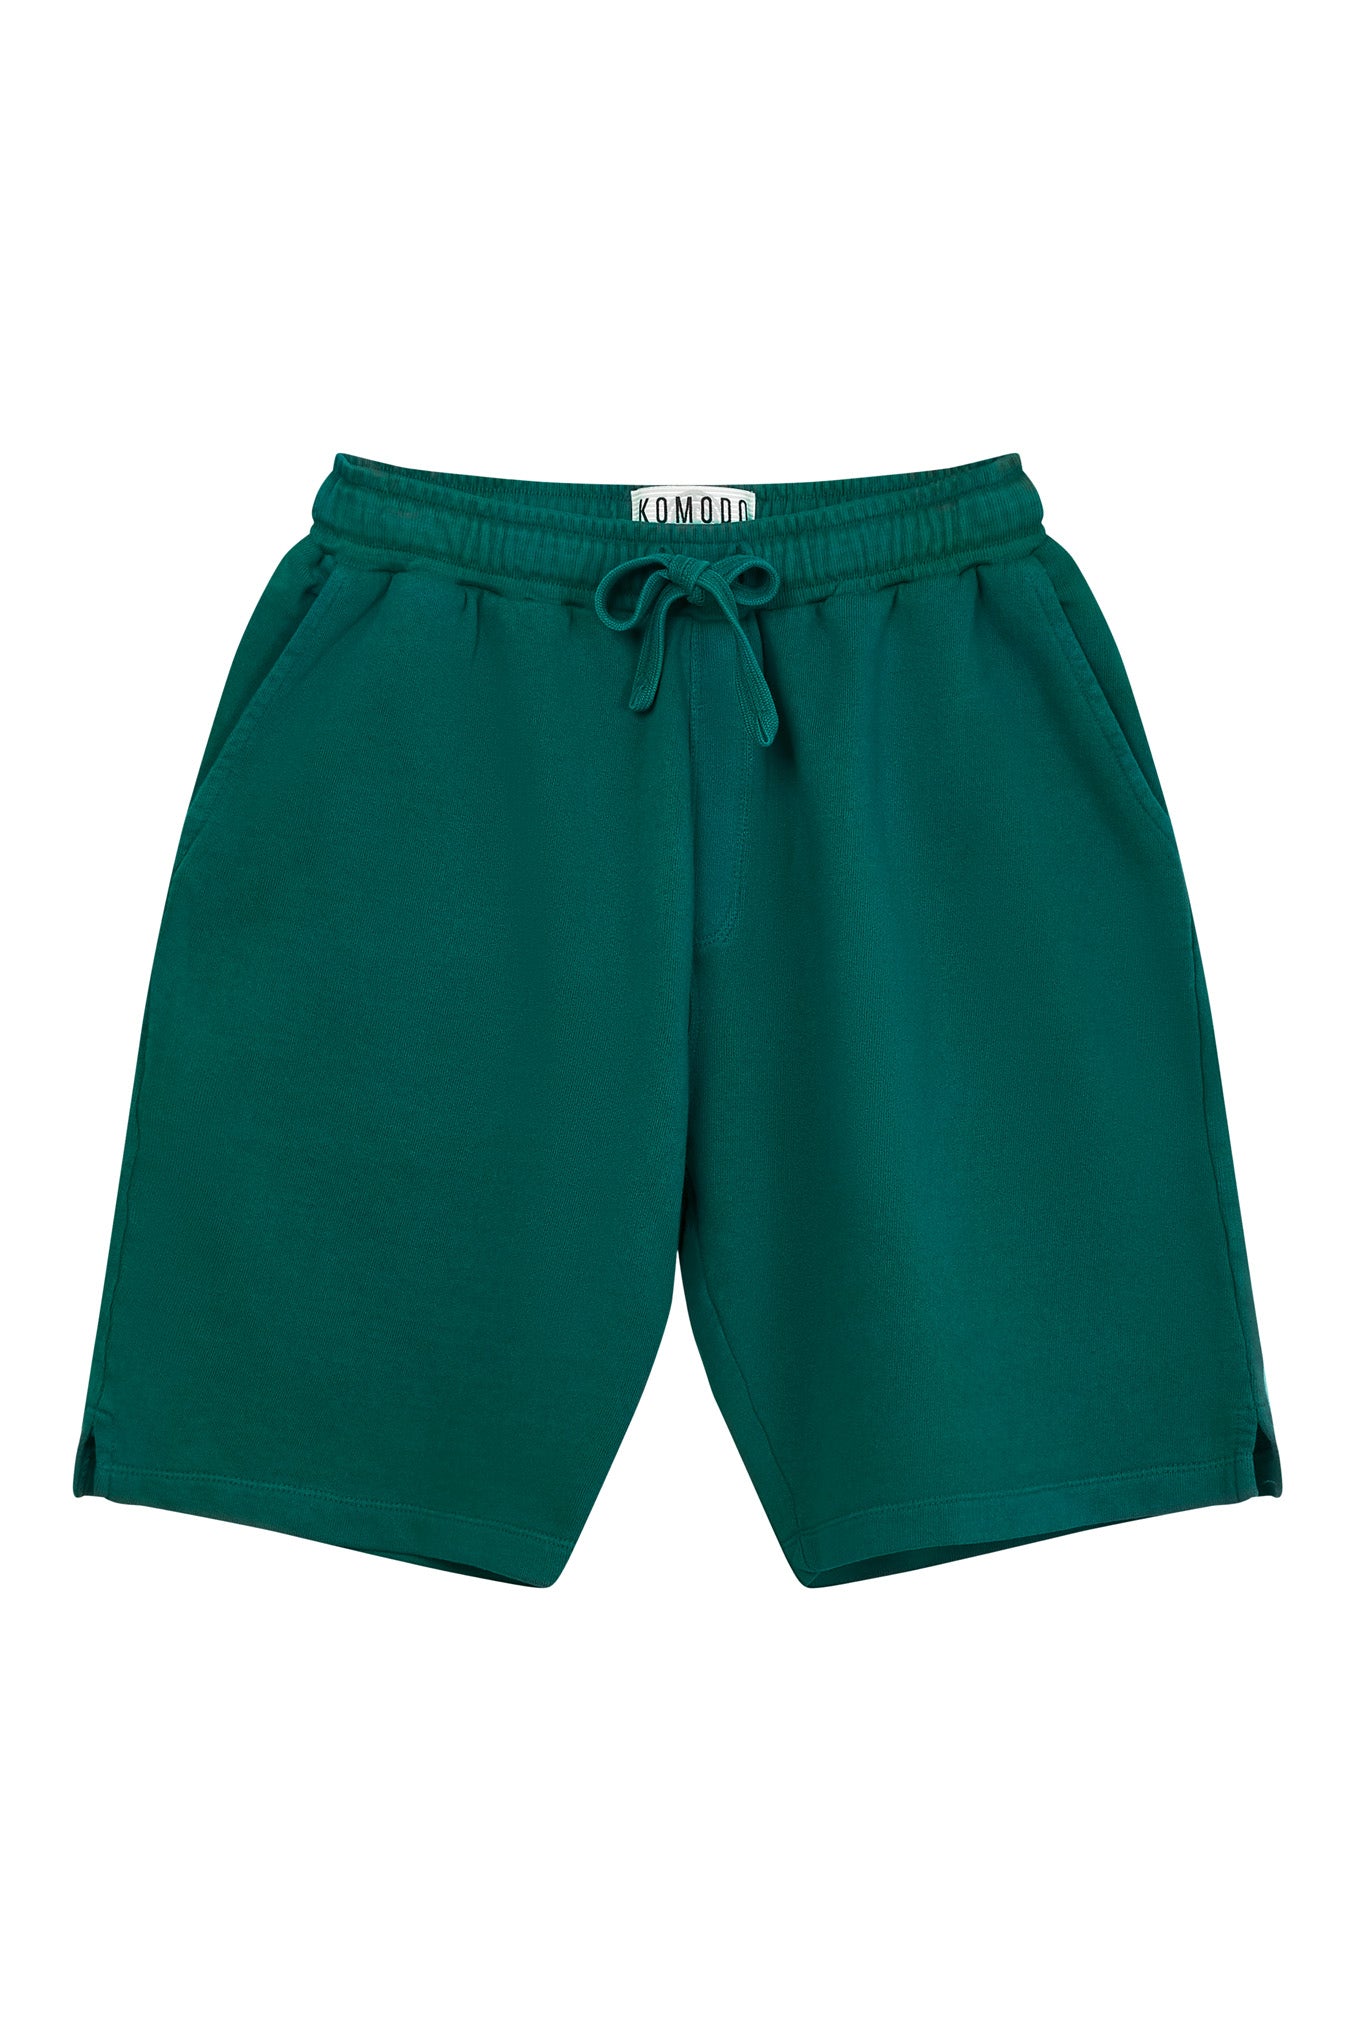 FLIP Short Men's Organic Cotton - Teal Green